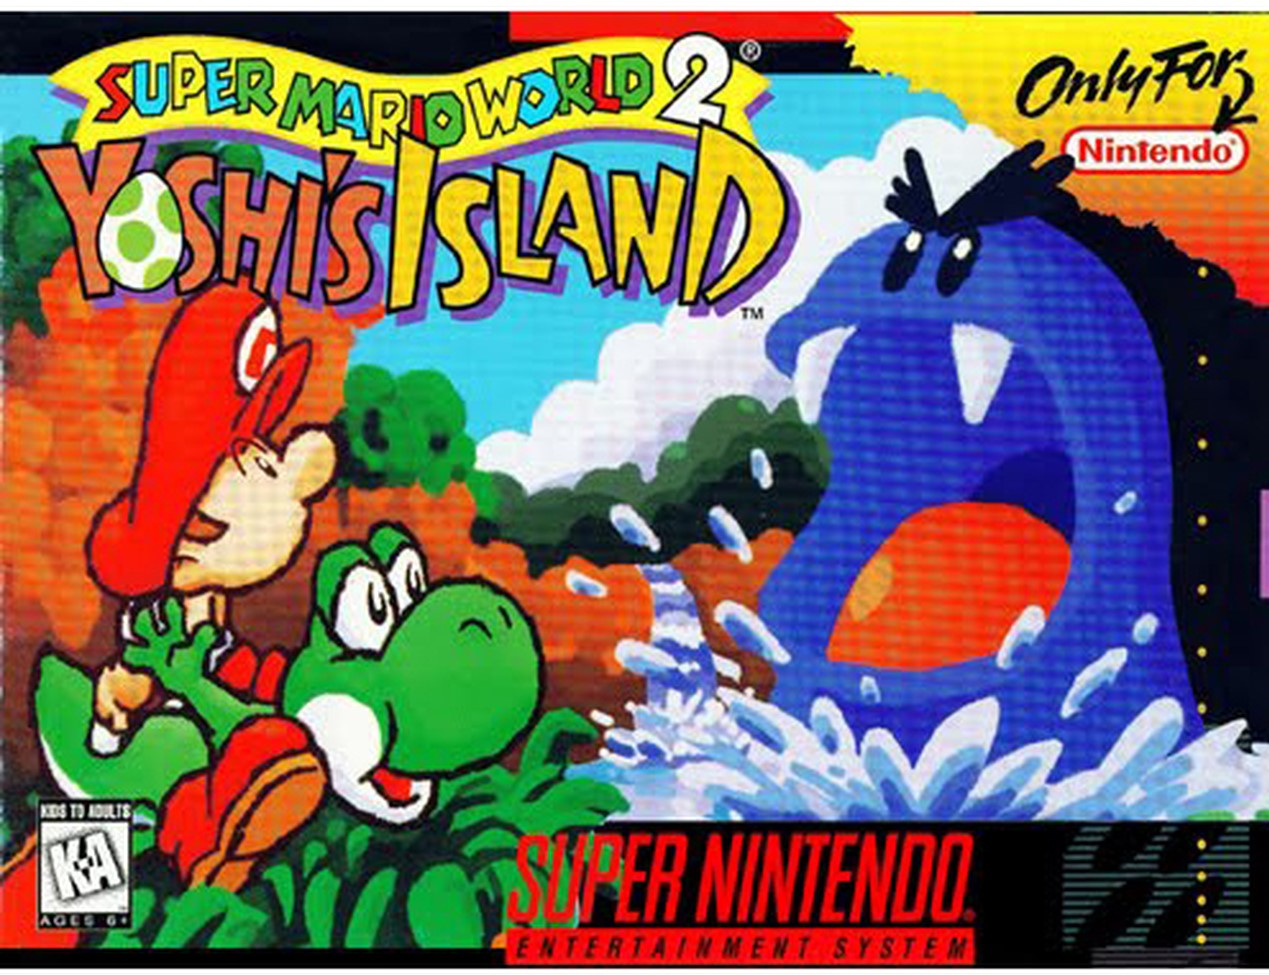 Super Mario World 2 Yoshis Island (Csak a kazetta)